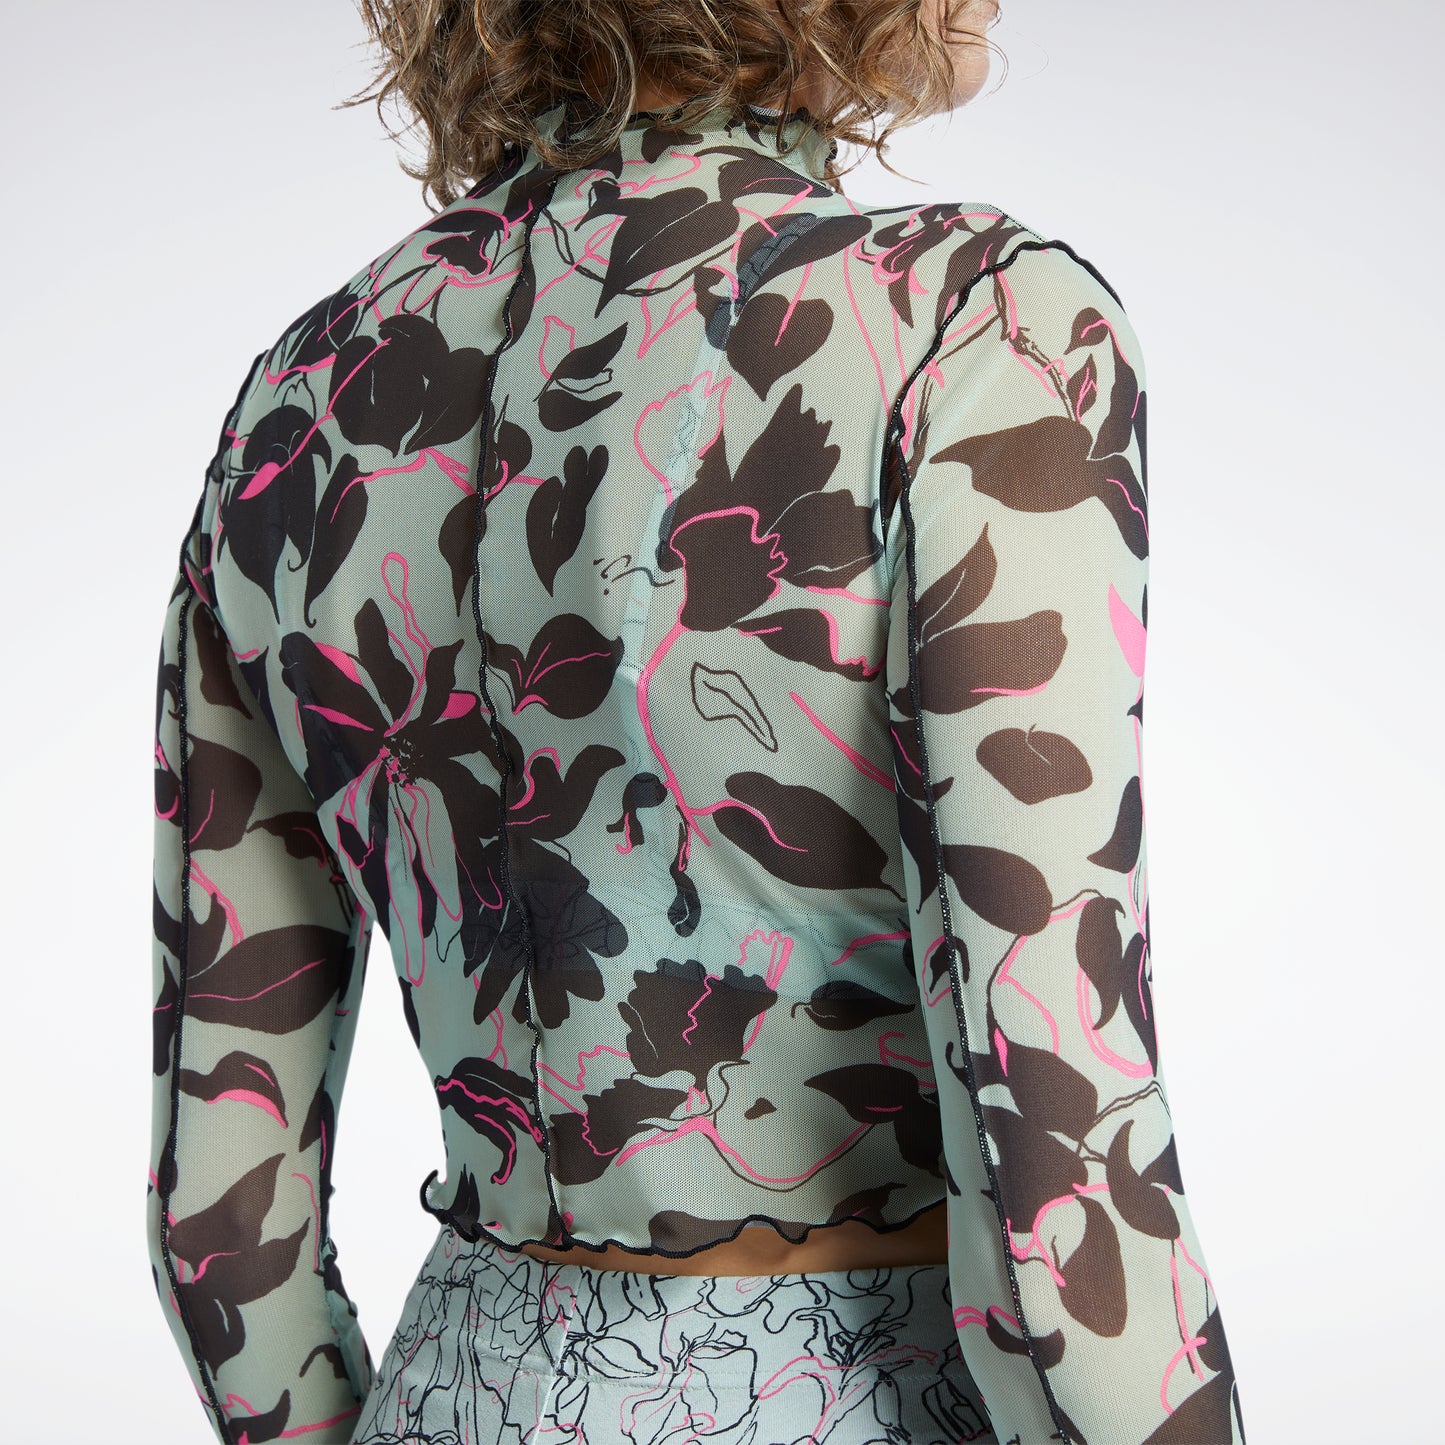 Reebok Apparel Women Classics Flourishing Floral Print Mesh Long-Sleeve Top Long-Sleeve Top Lgtsag